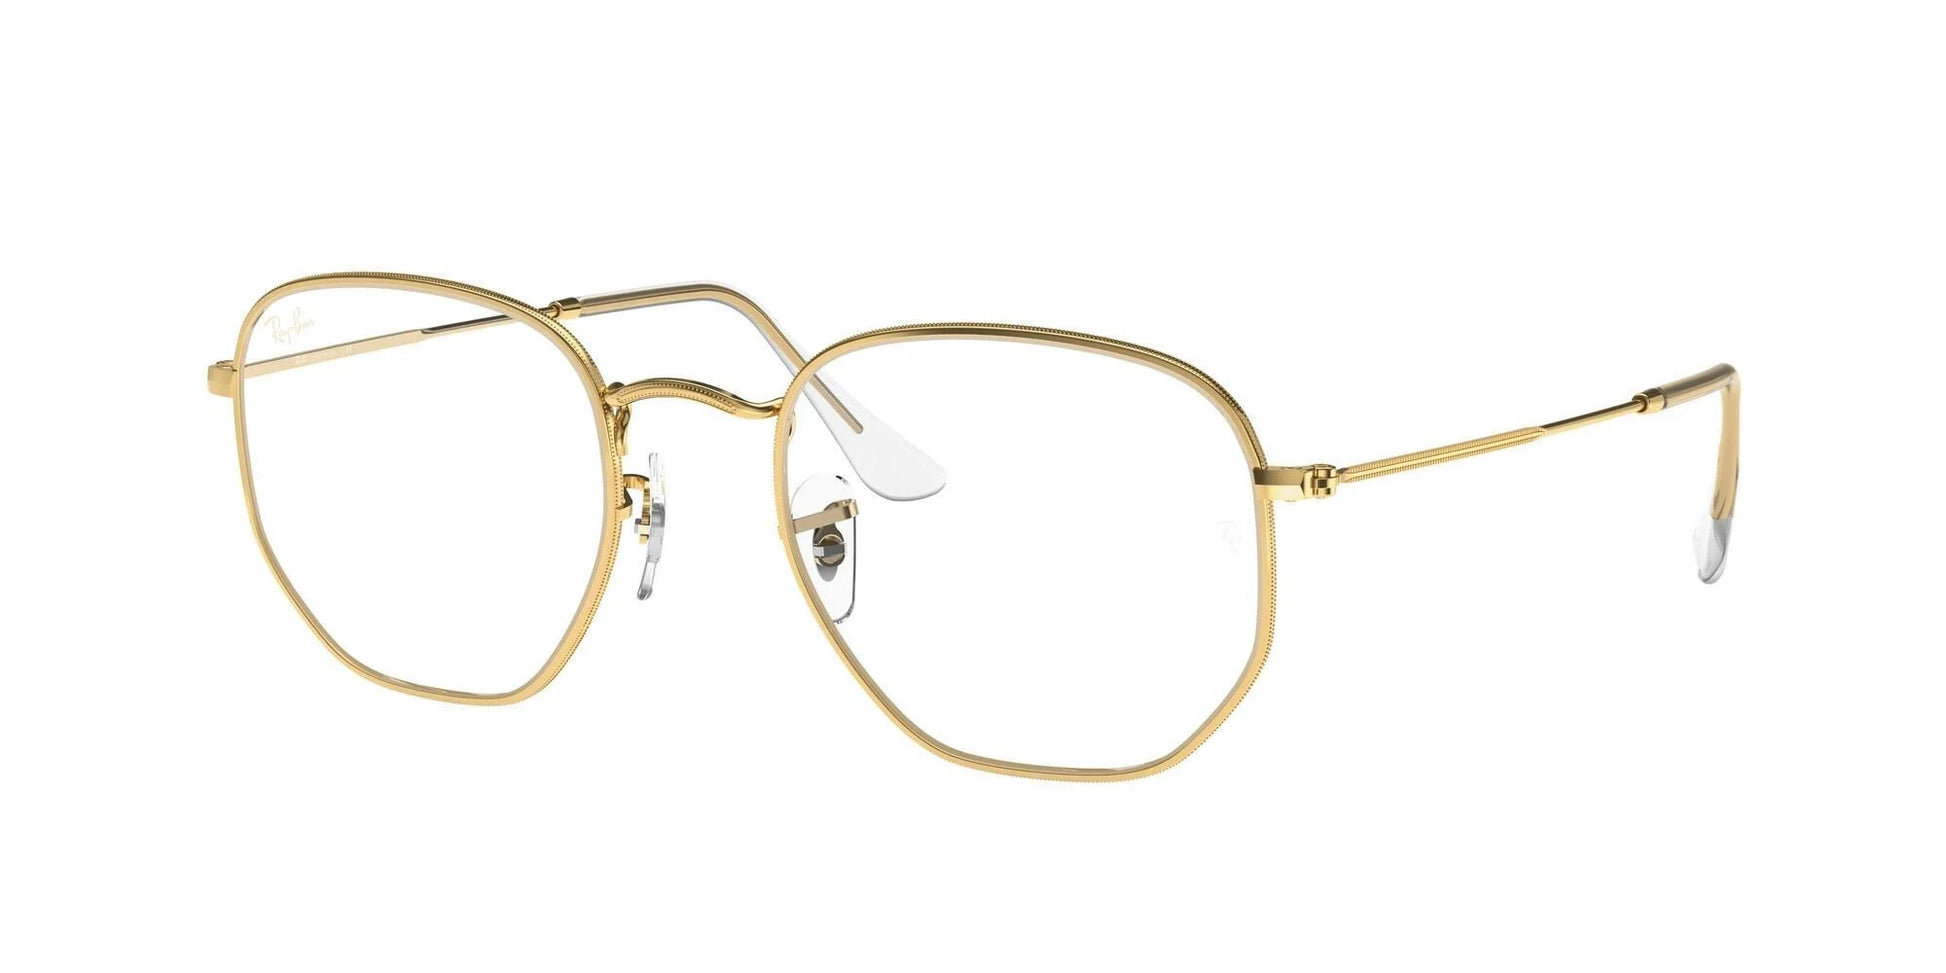 Ray-Ban HEXAGONAL RB3548 Eyeglasses Gold